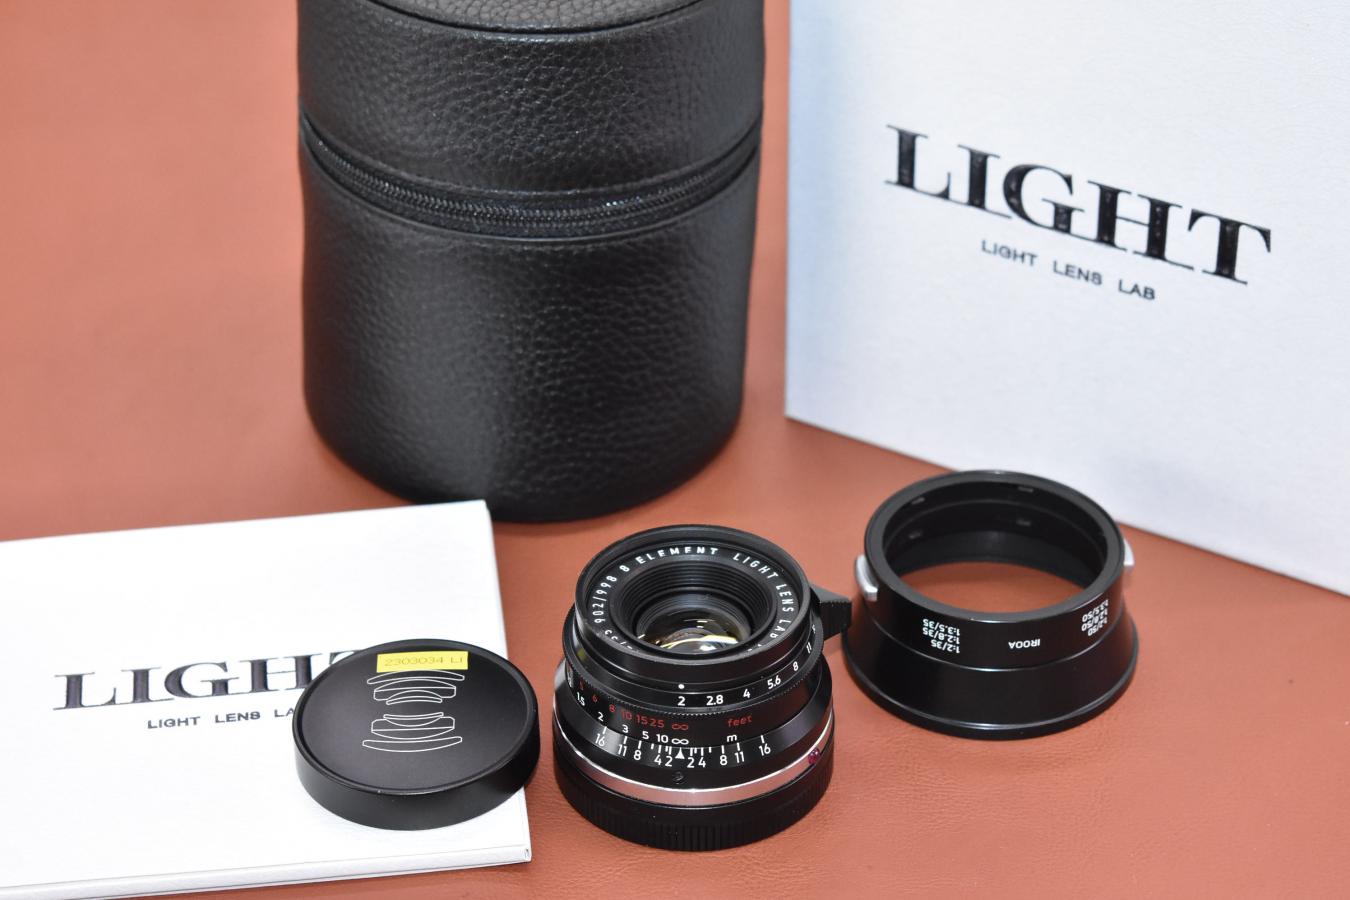 Light lens lab M 35mm F2 (周八枚) ブラックペイント-uwasnet.org